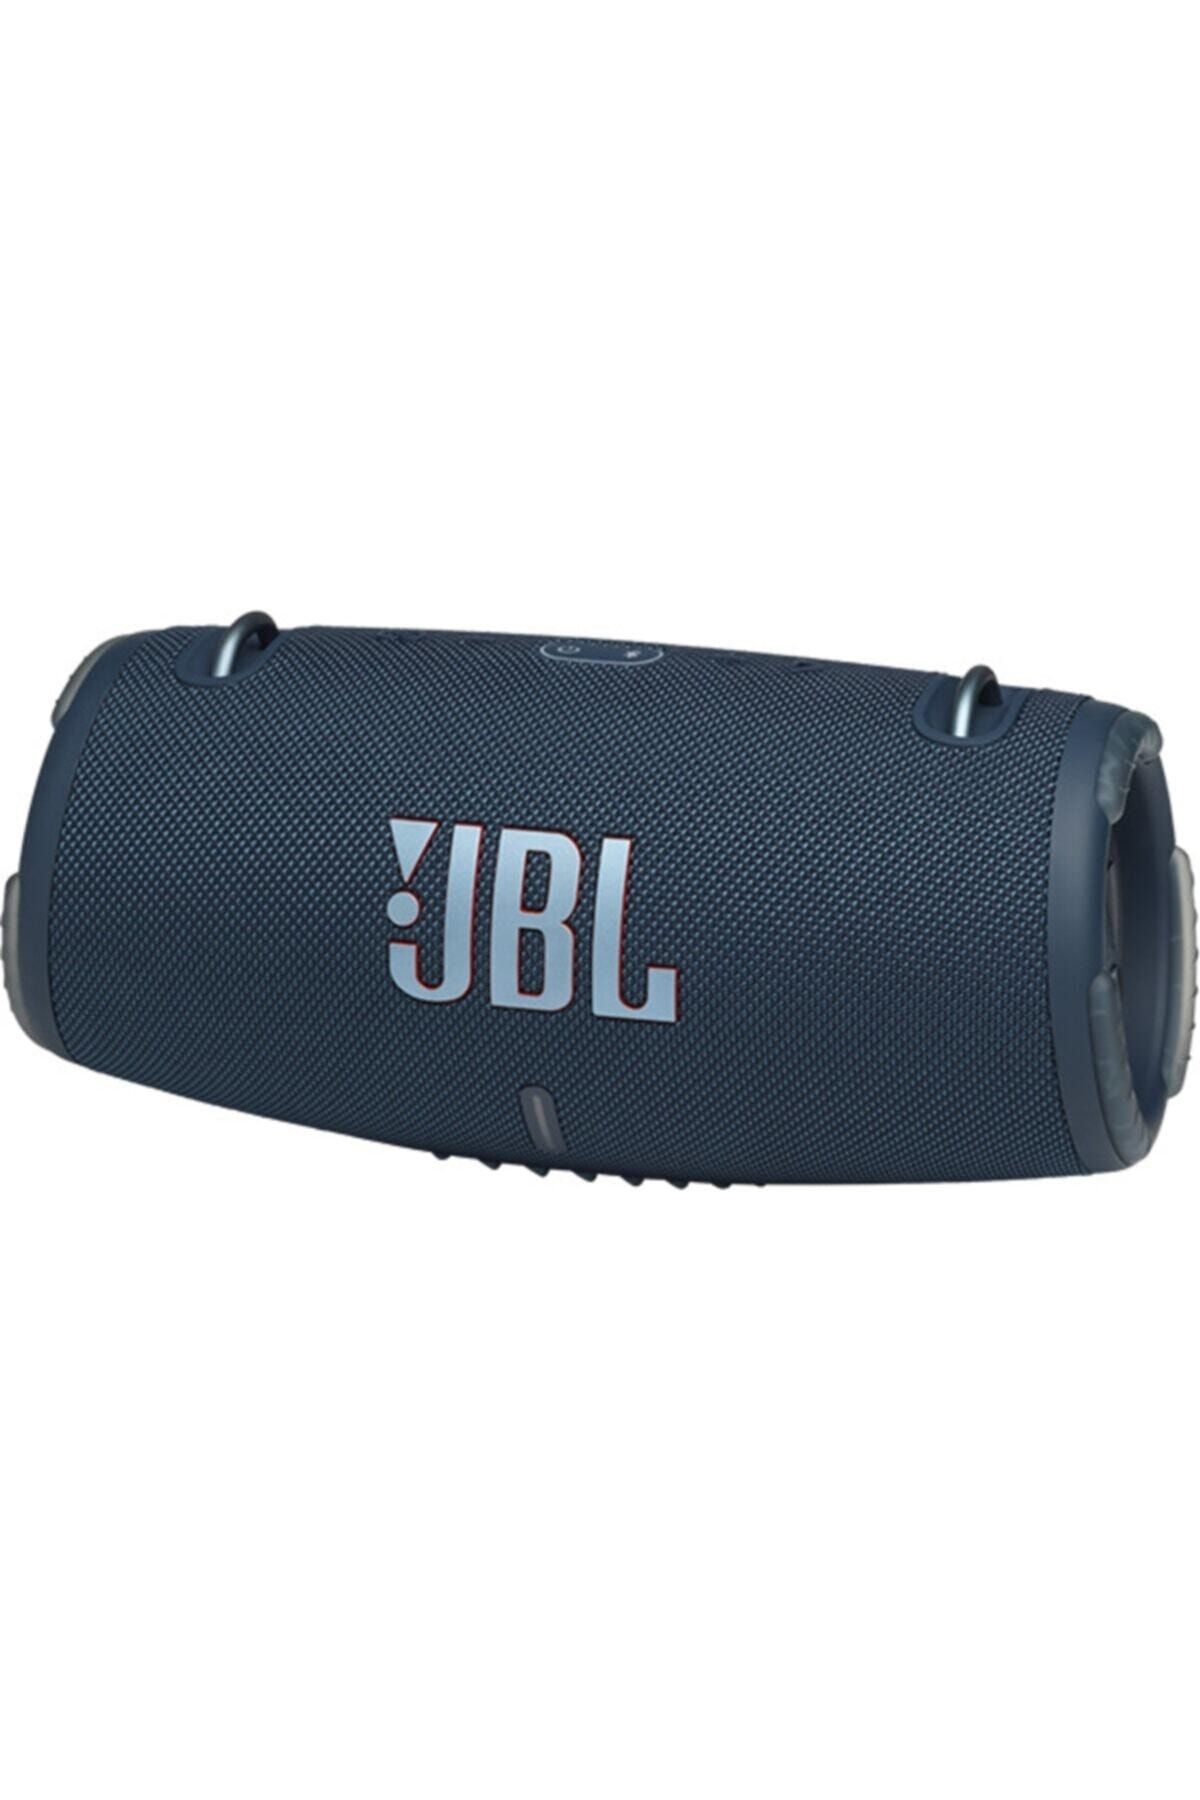 JBL Xtreme 3 Taşınabilir Bluetooth Hoparlör– Mavi